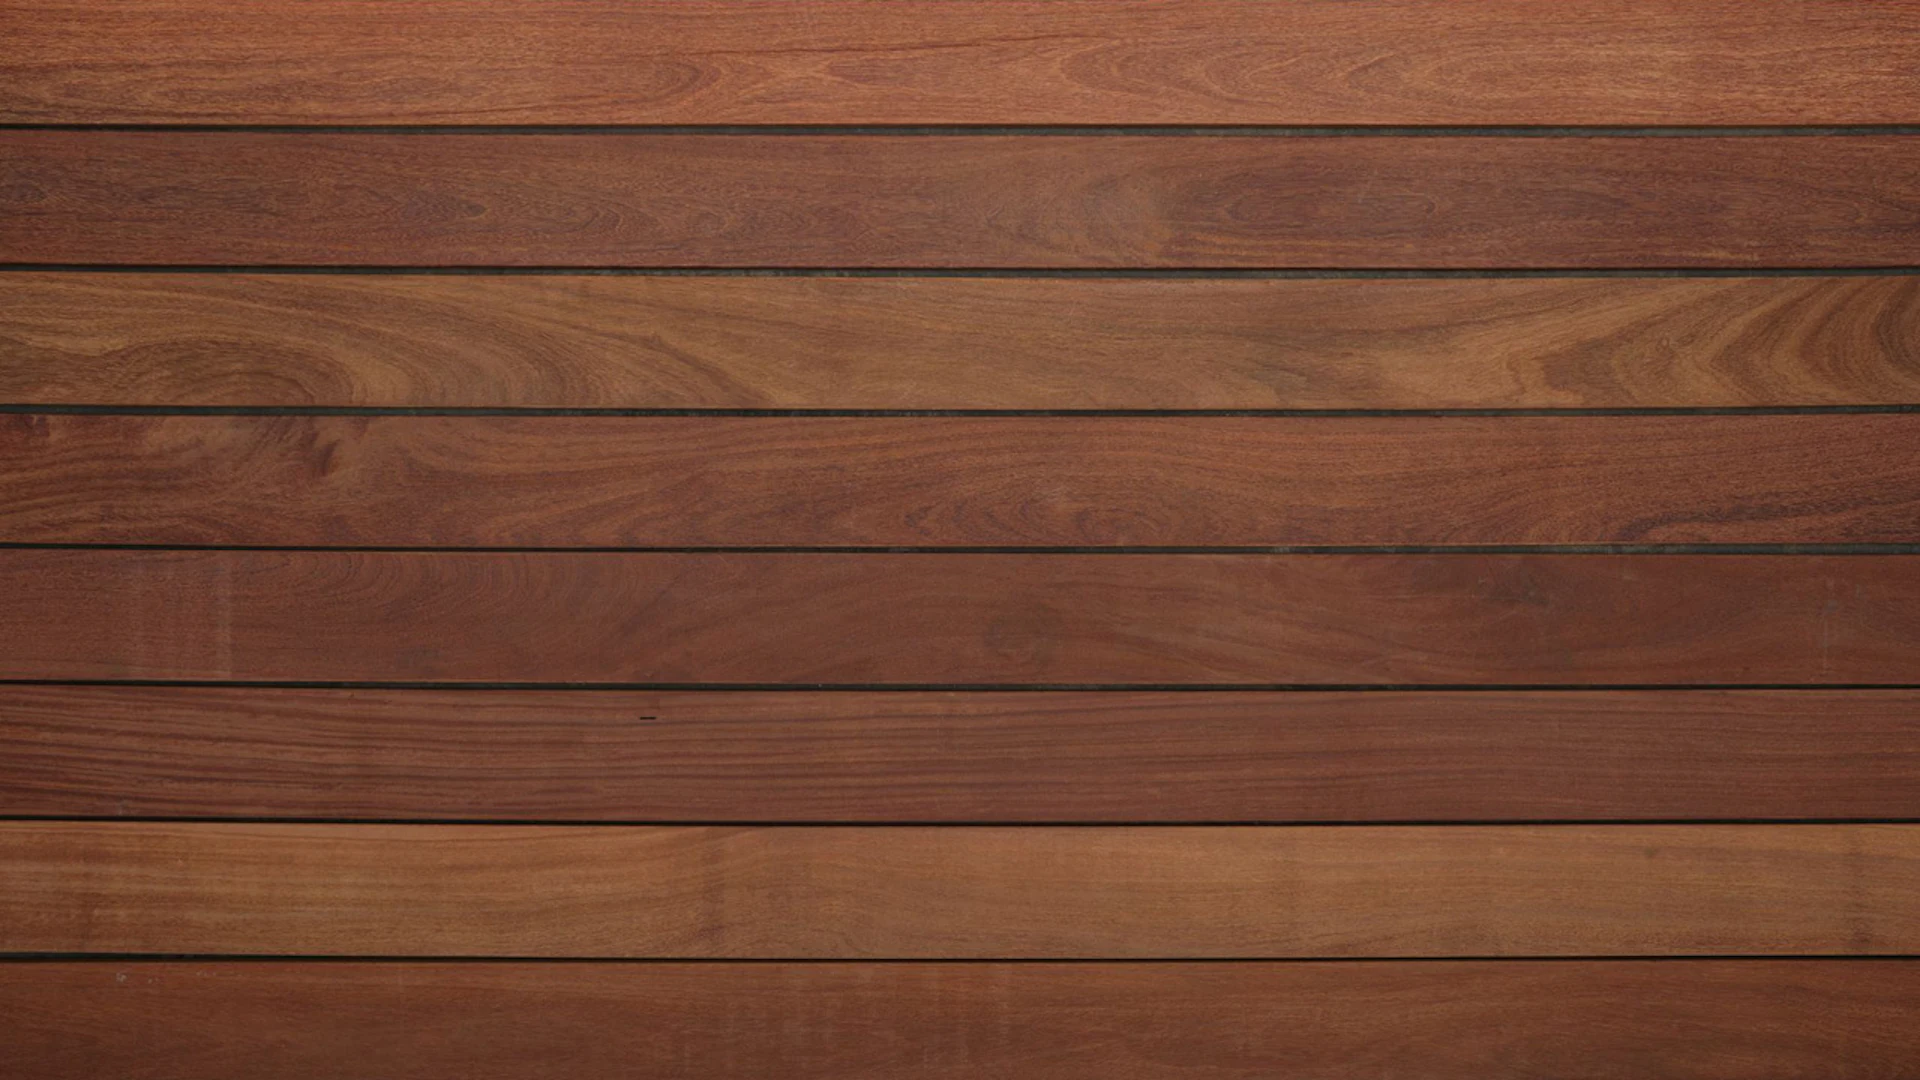 TerraWood Wood Decking Cumaru brown PRIME 21 x 145 x 3050mm - smooth on both sides